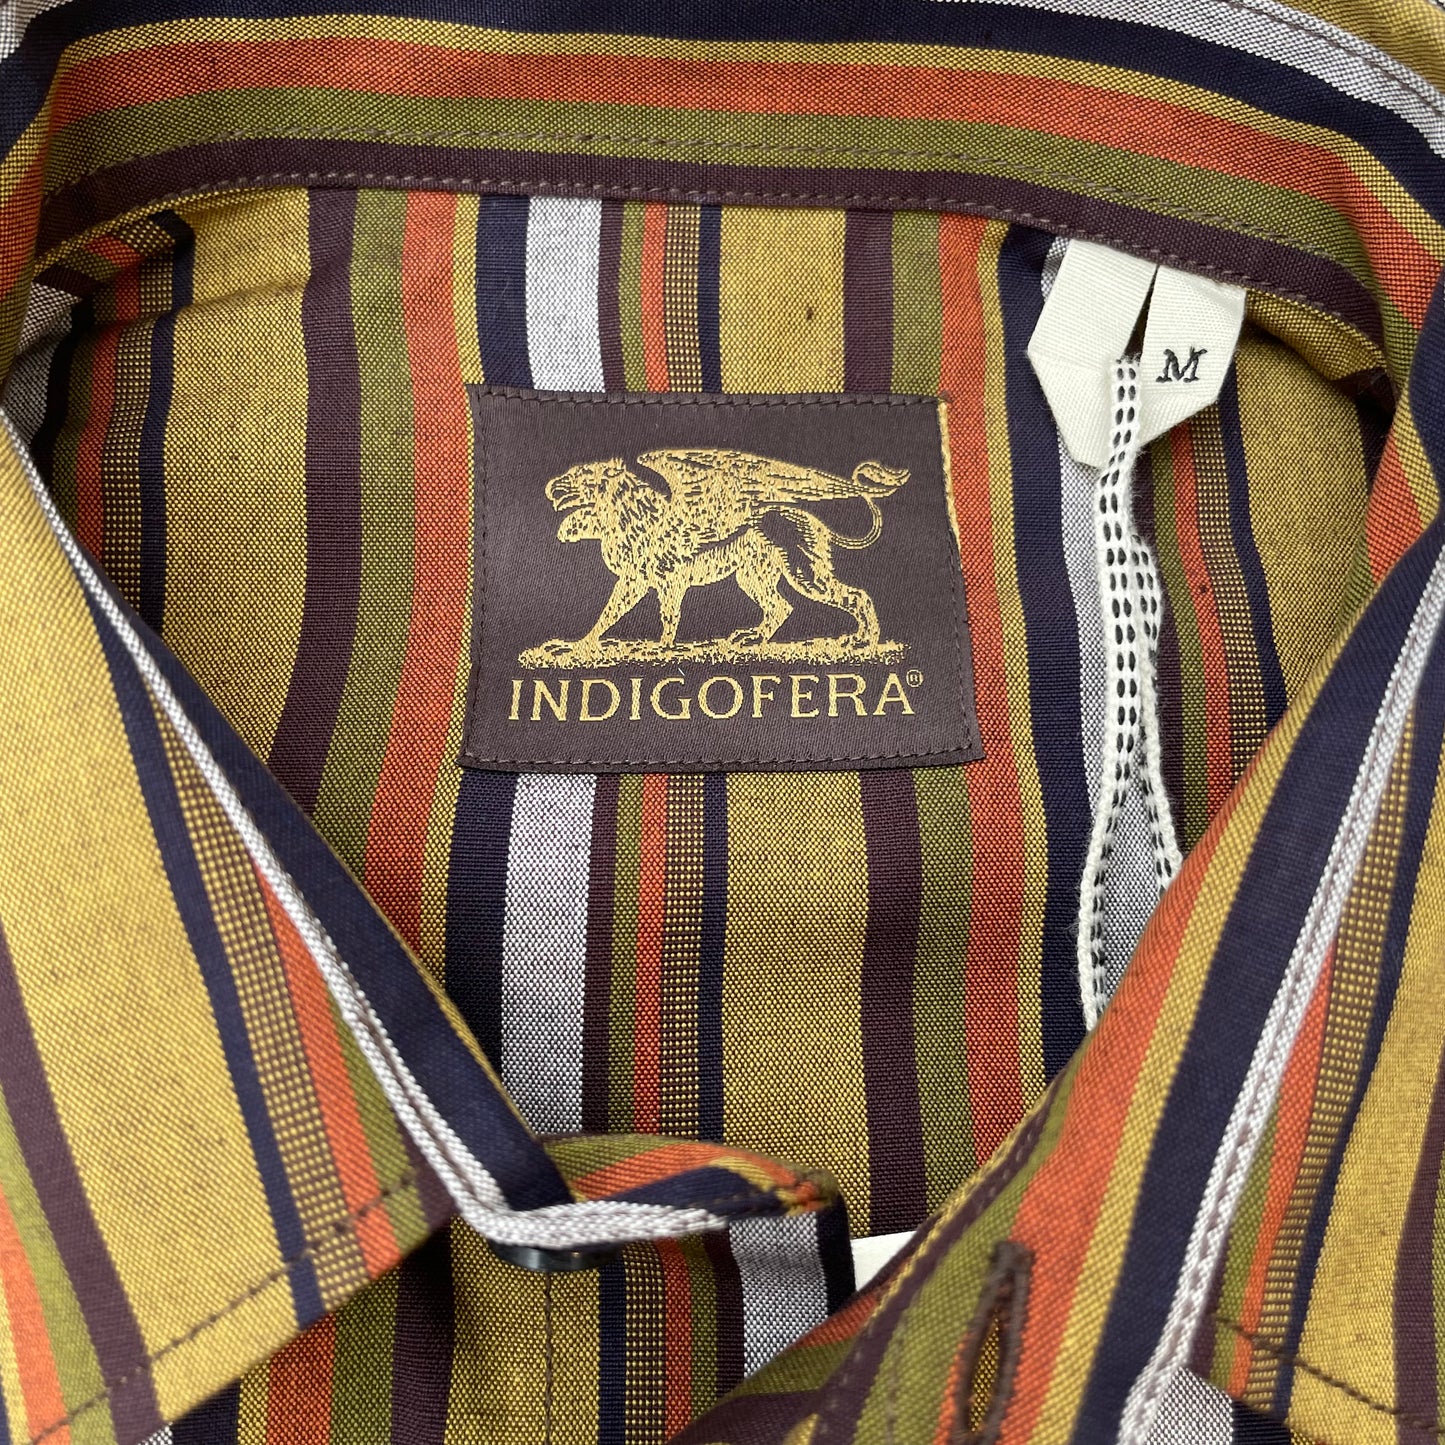 Indigofera - Sideras Western multicolored shirt